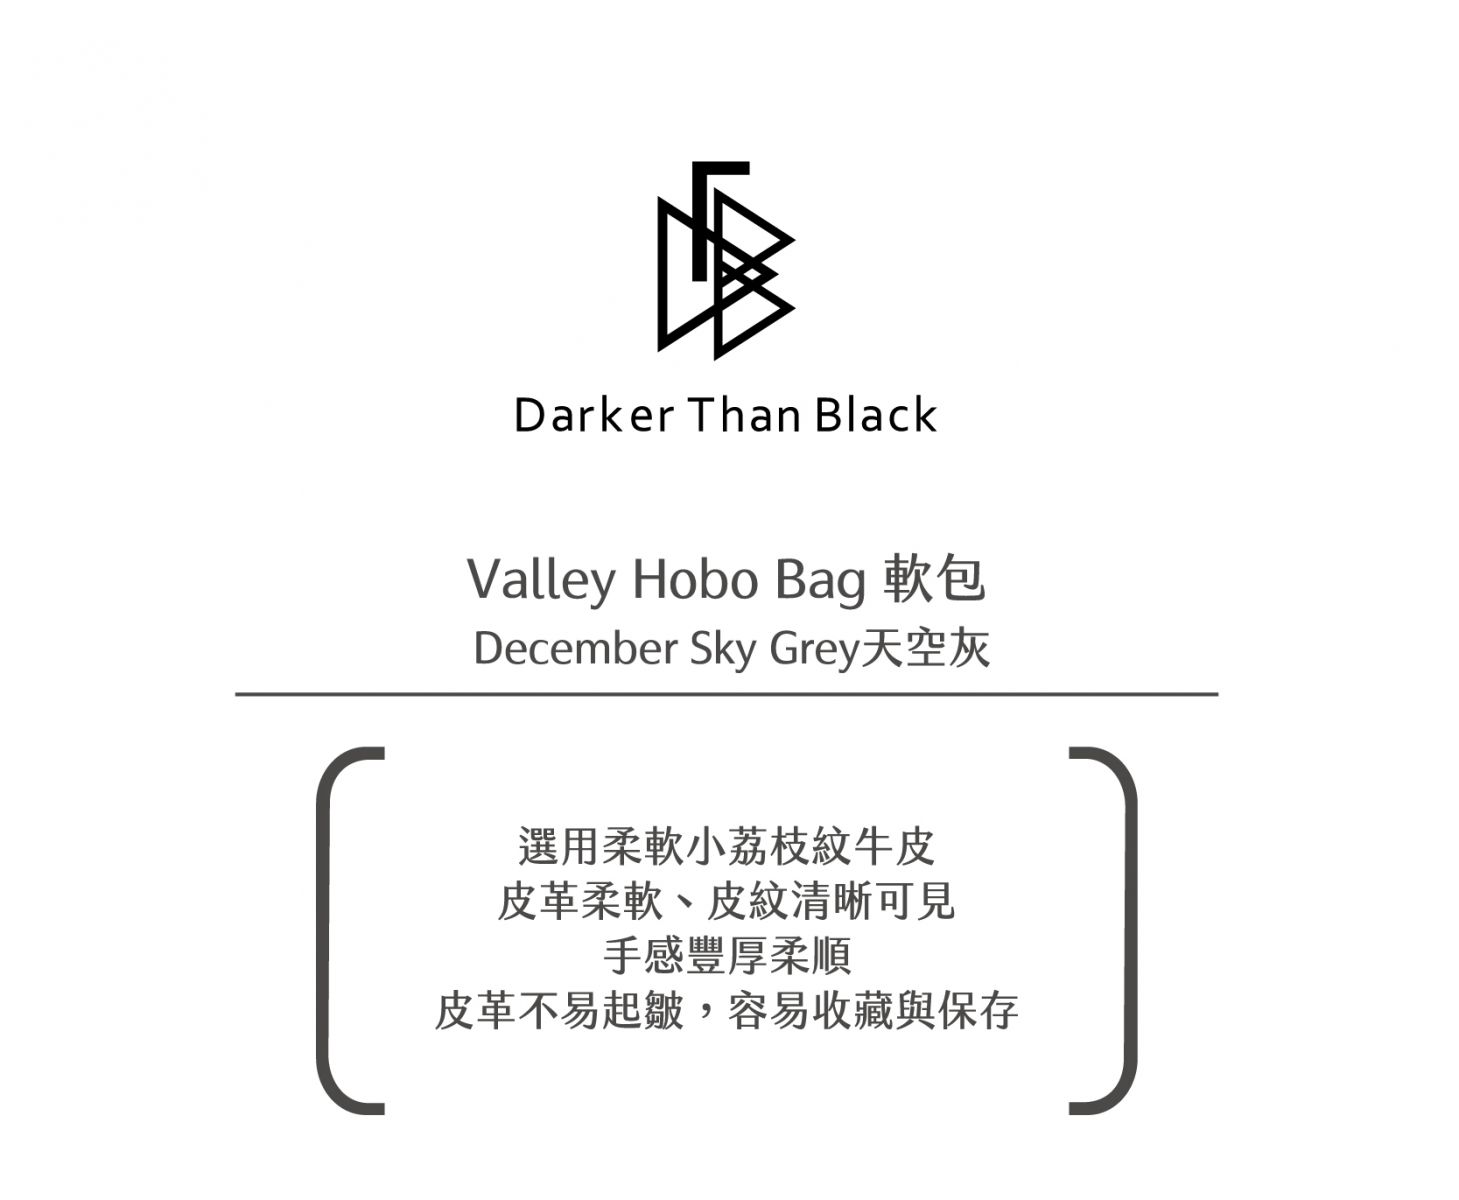 DTB_Valley Hobo Bag 軟包-December Sky Grey天空灰